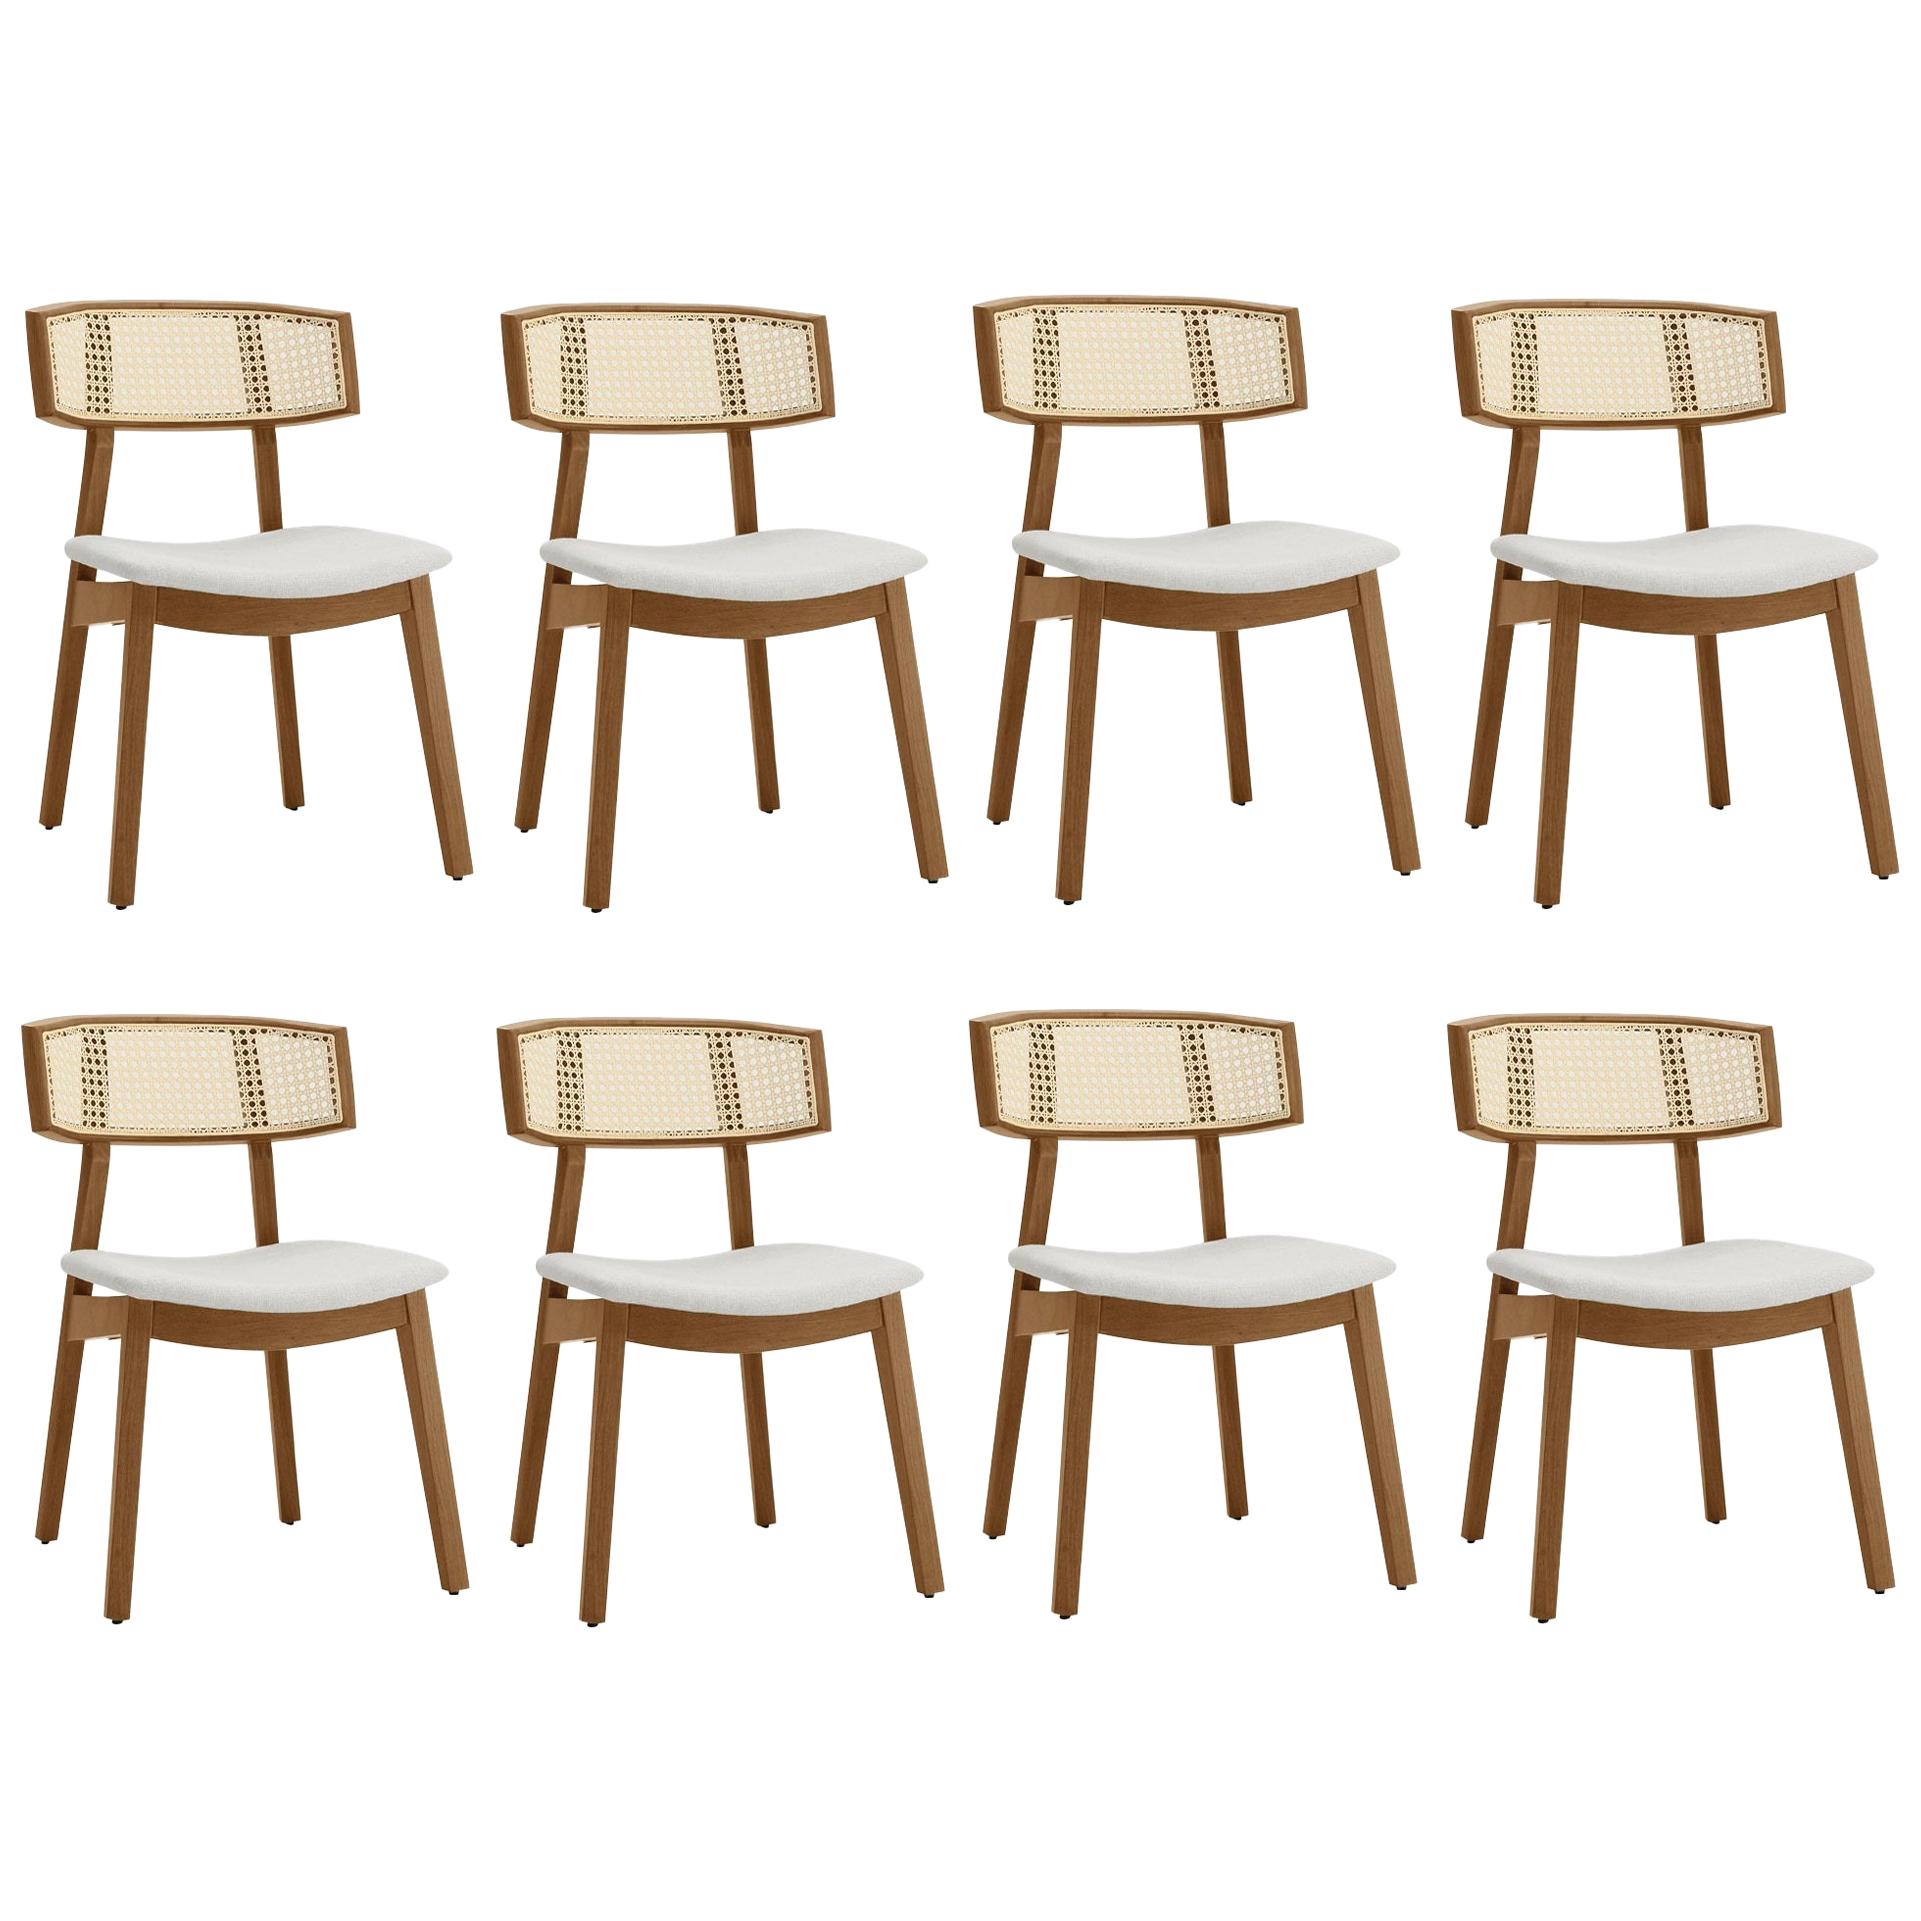 Contemporary Rattan Dining Chair Set of 8, Walnut/Cream Linen